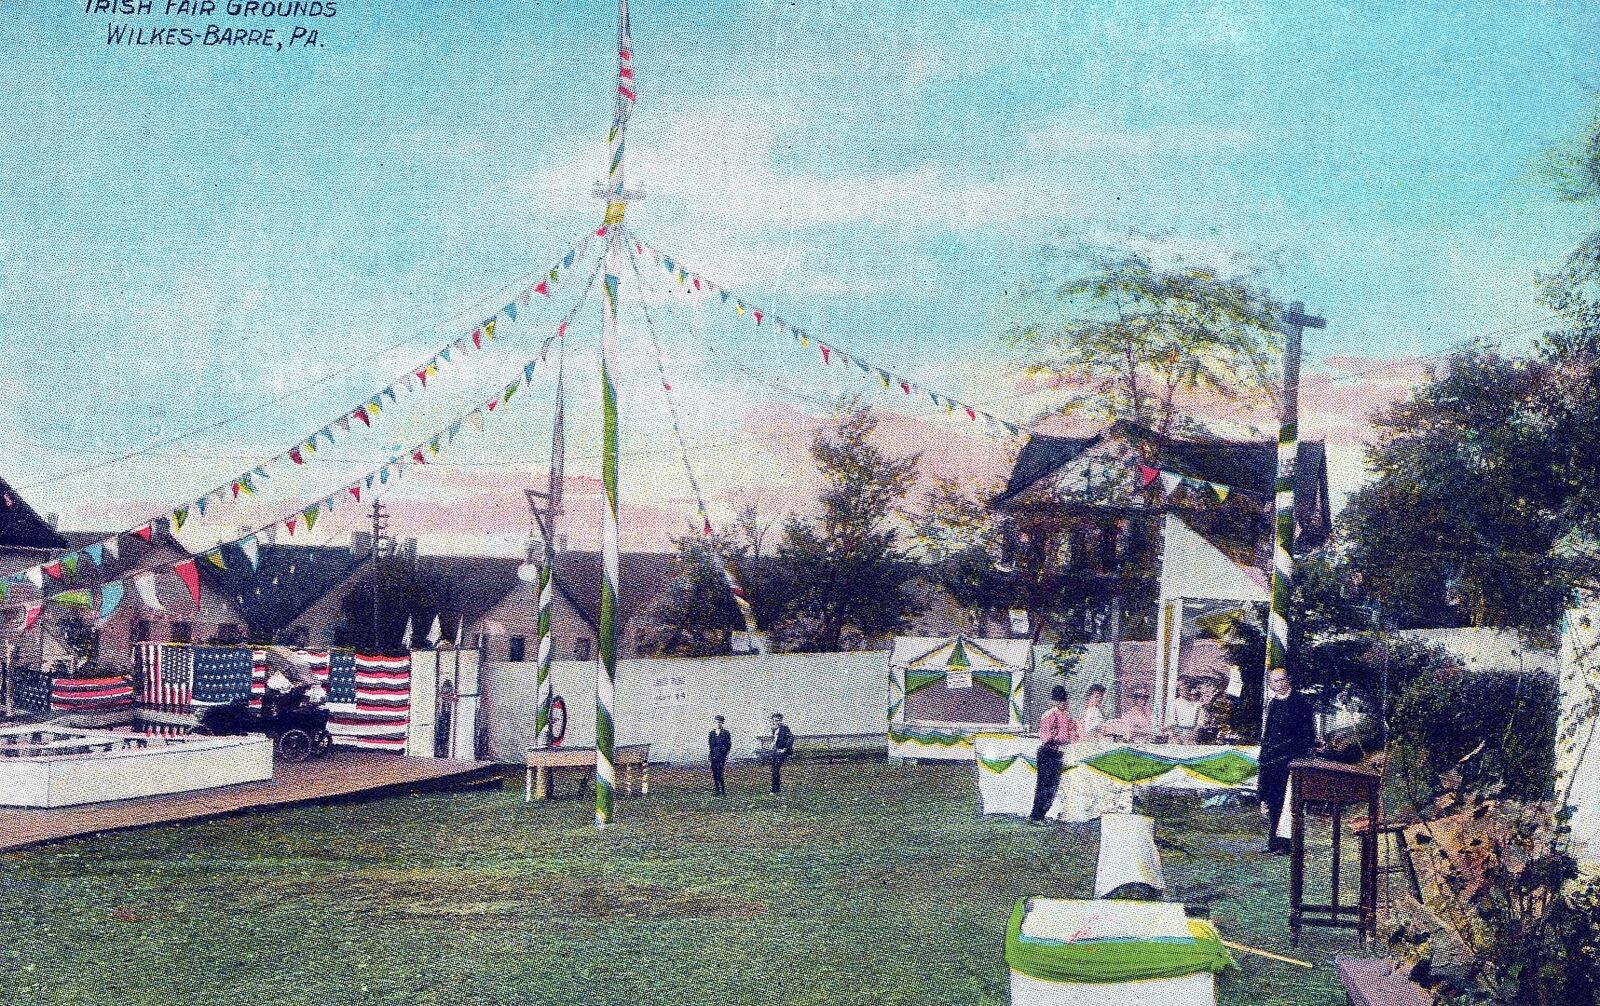 WILKES-BARRE PA - Irish Fair Grounds 1908 Irish Musical And Art Exposition